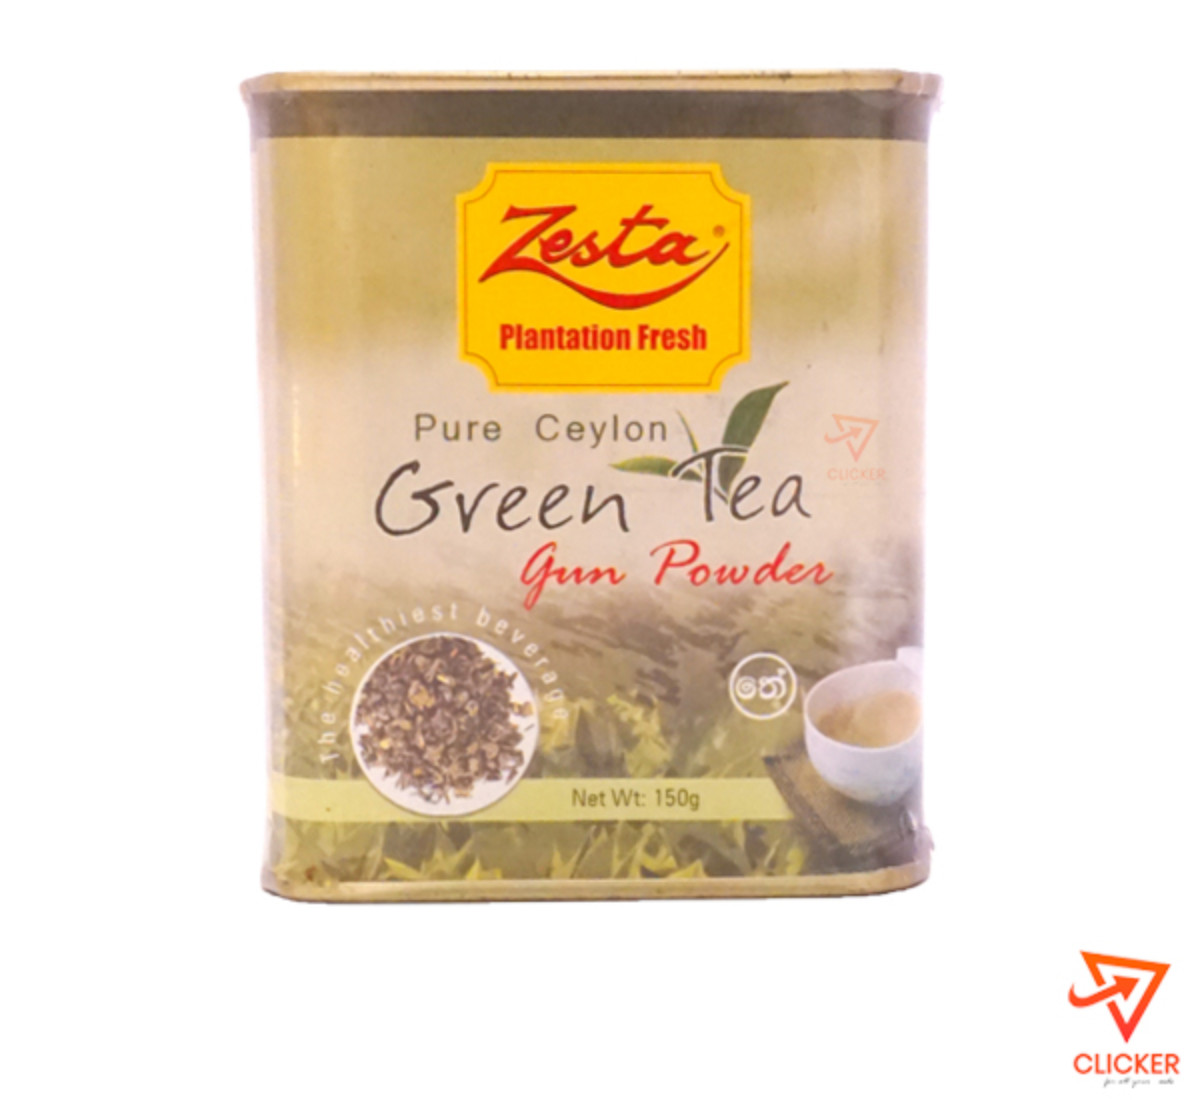 Clicker product 150g ZESTA Green tea 983